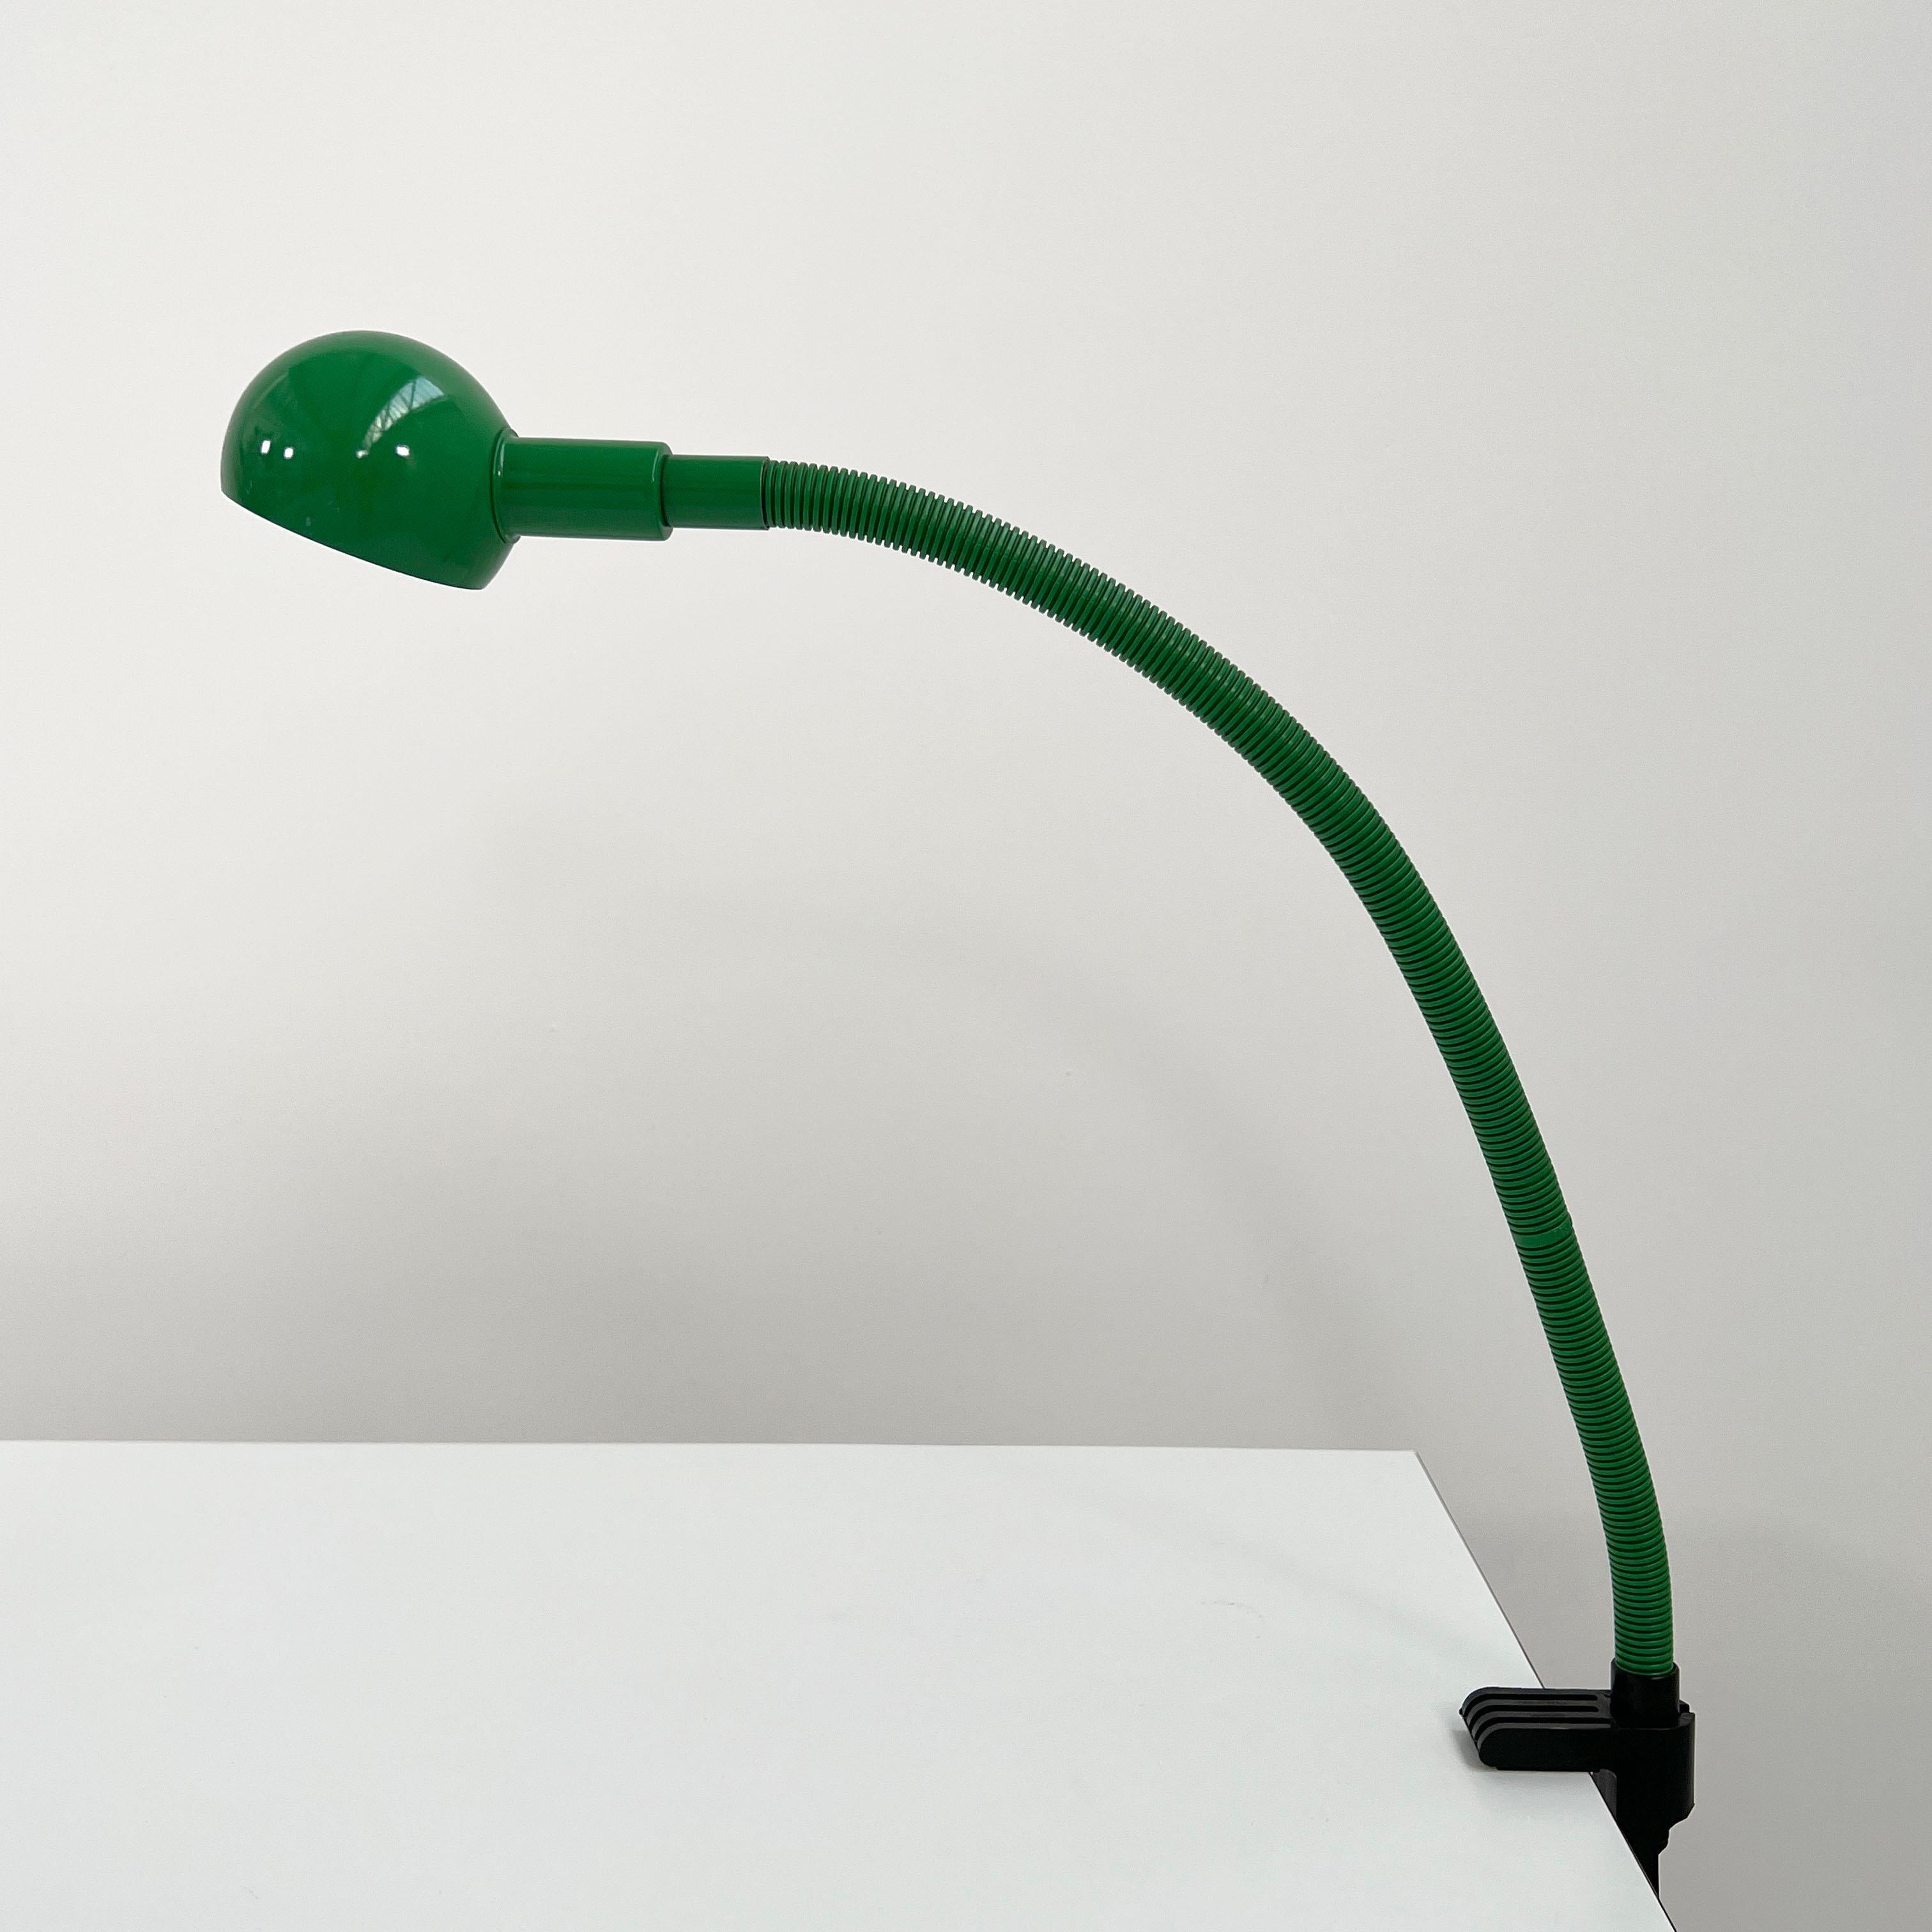 Green Hebi desk Lamp by Isao Hosoe for Valenti, 1970s
Designer - Isao Hosoe 
Producer - Valenti
Model - Hebi Desk Lamp
Design Period - Seventies
Measurements - width 27 cm x depth 27 cm x height 40 cm
Materials - Metal, Plastic
Color -